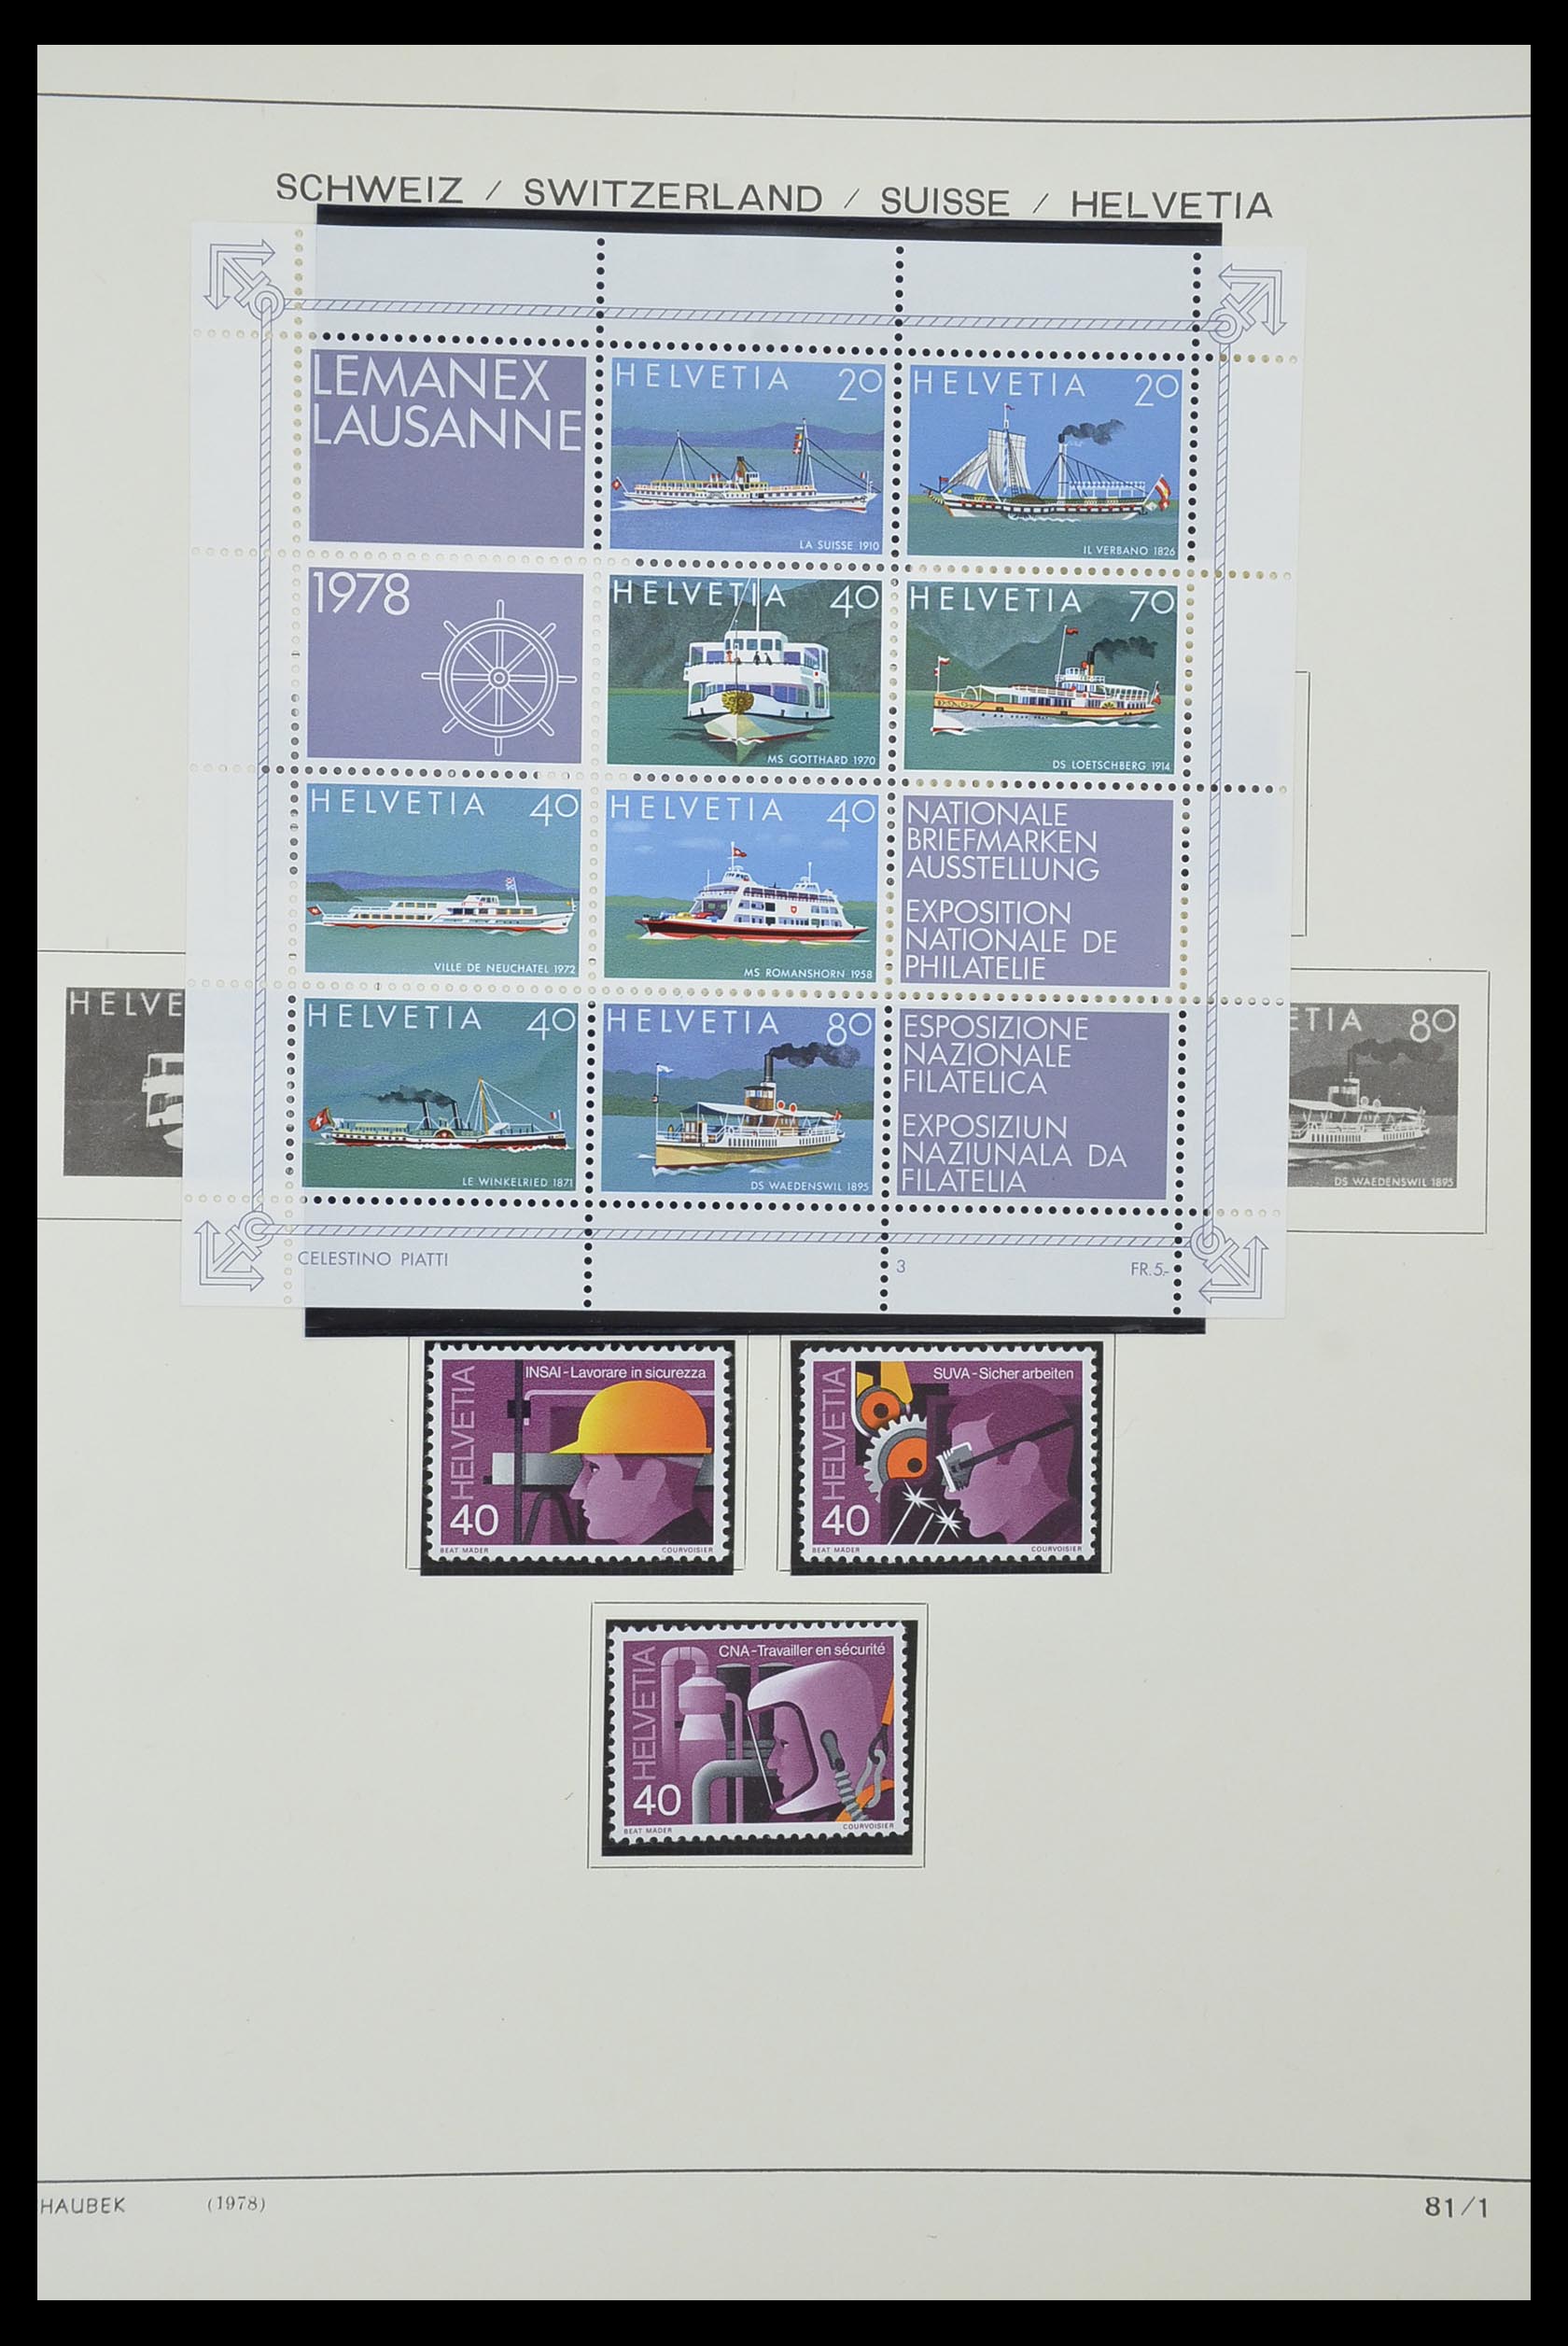 33601 069 - Stamp collection 33601 Switzerland 1854-1985.